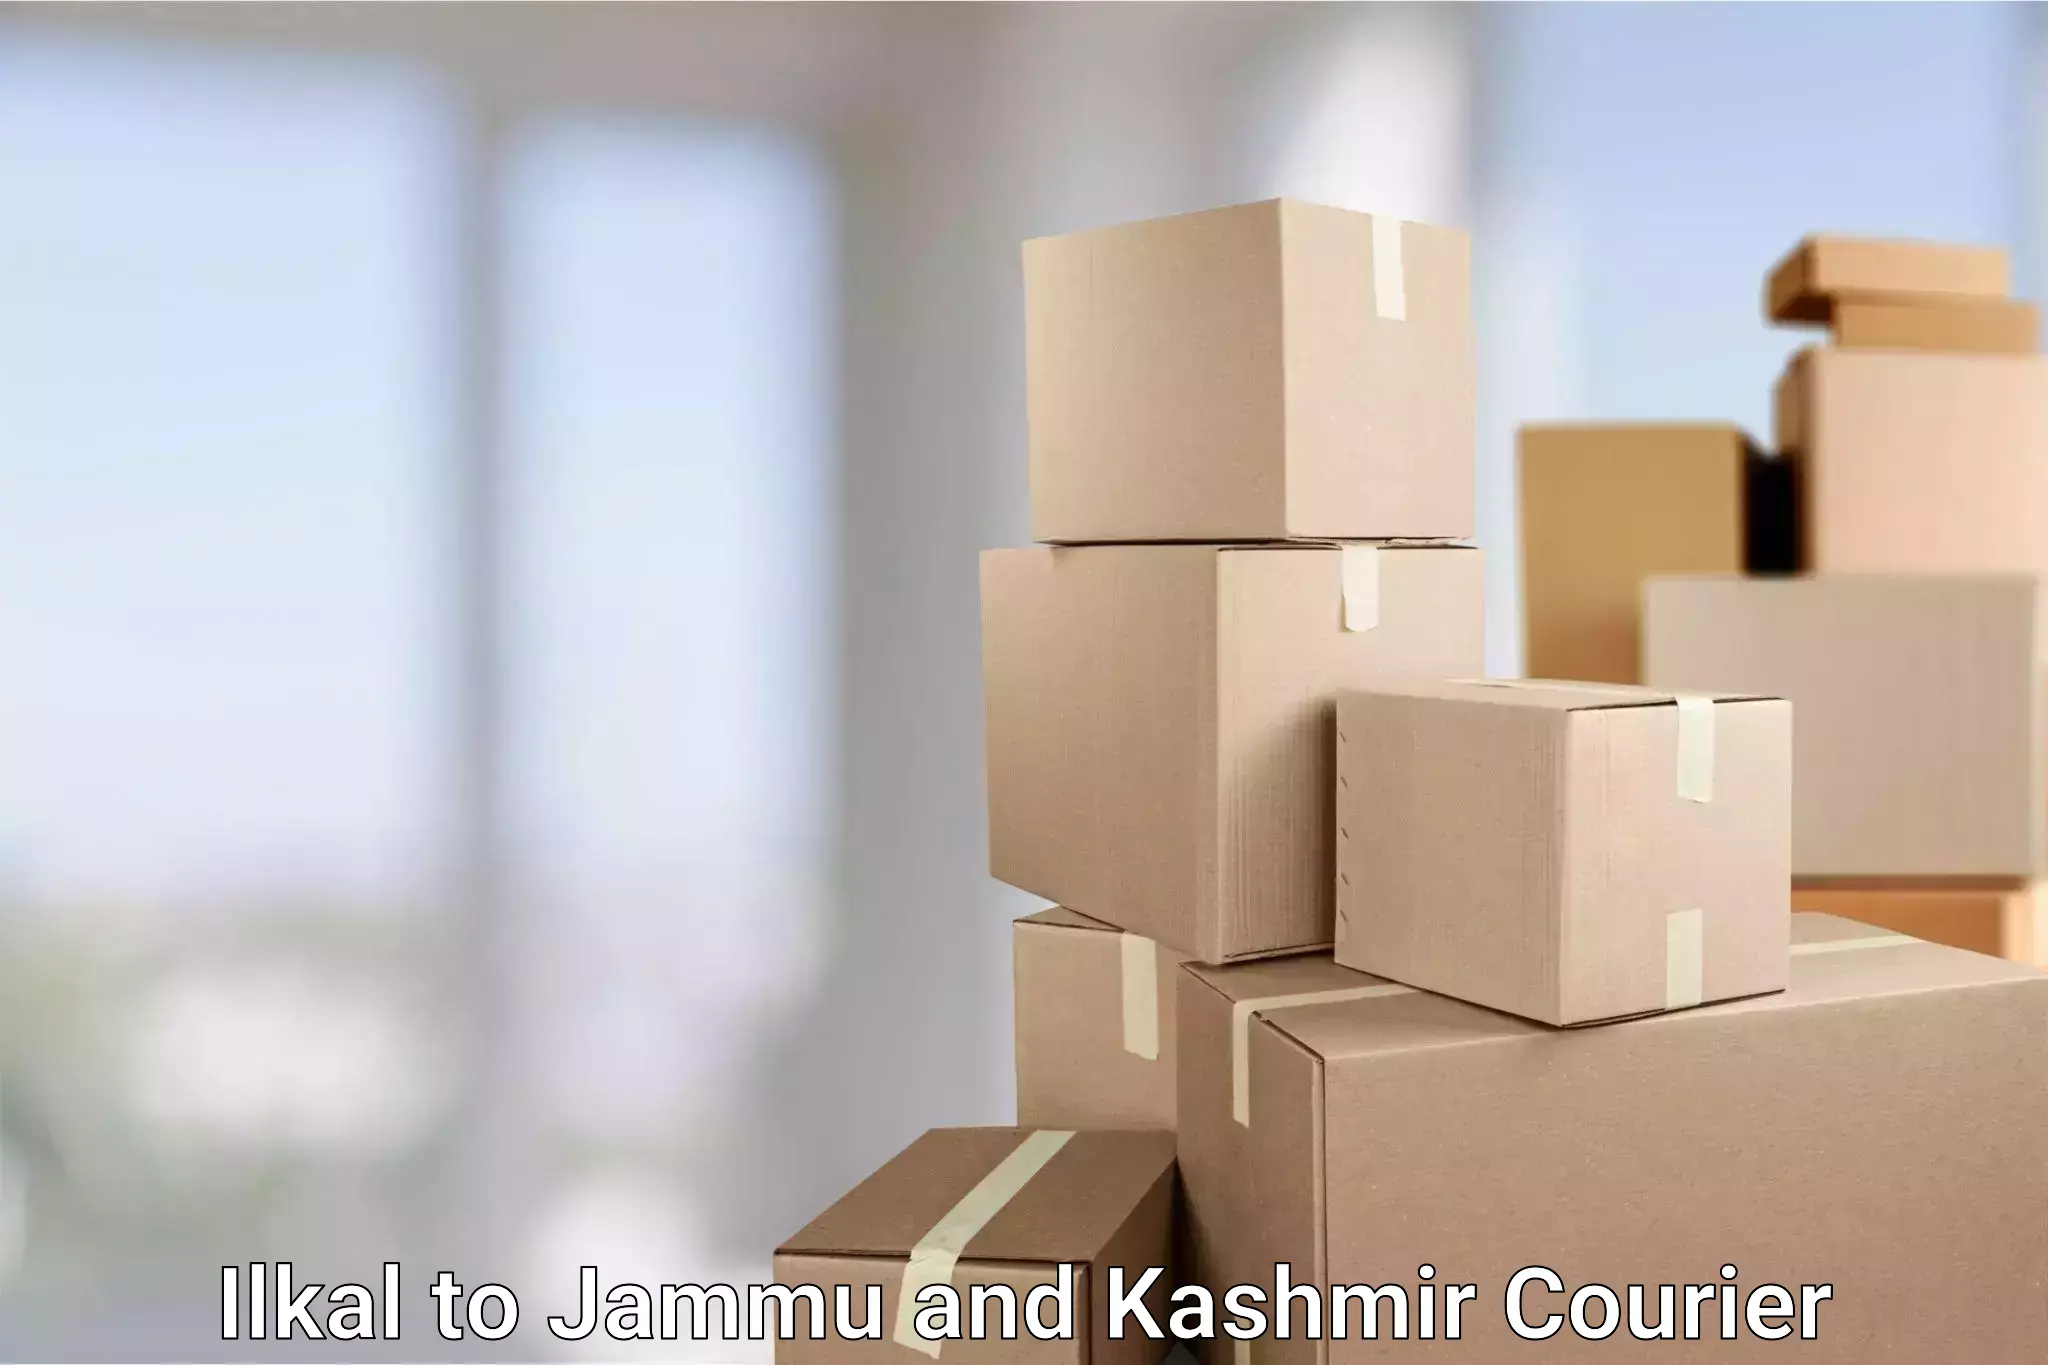 Business delivery service in Ilkal to Srinagar Kashmir